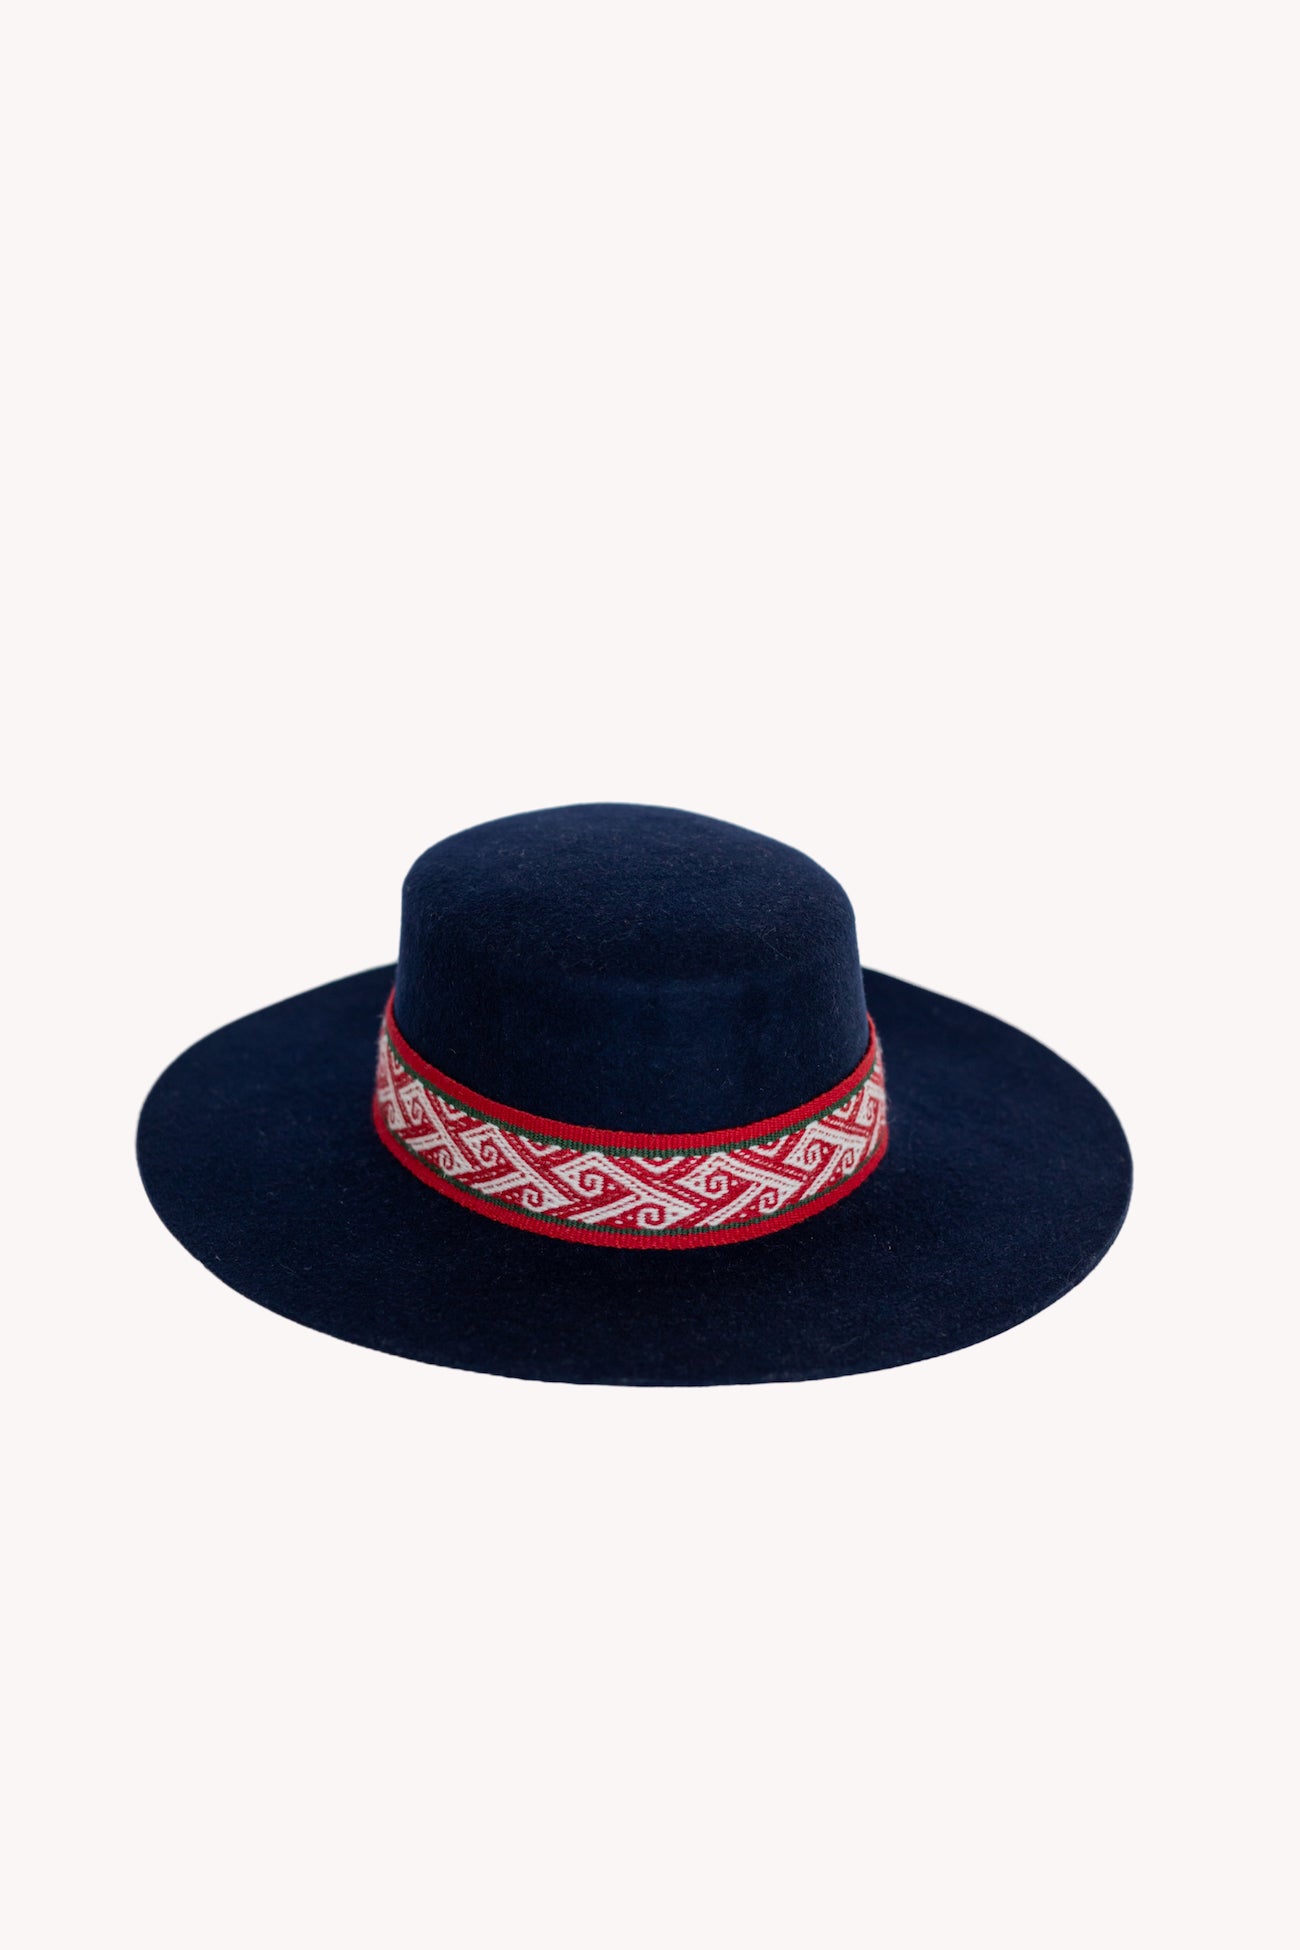 Blue Spanish style handmade hat